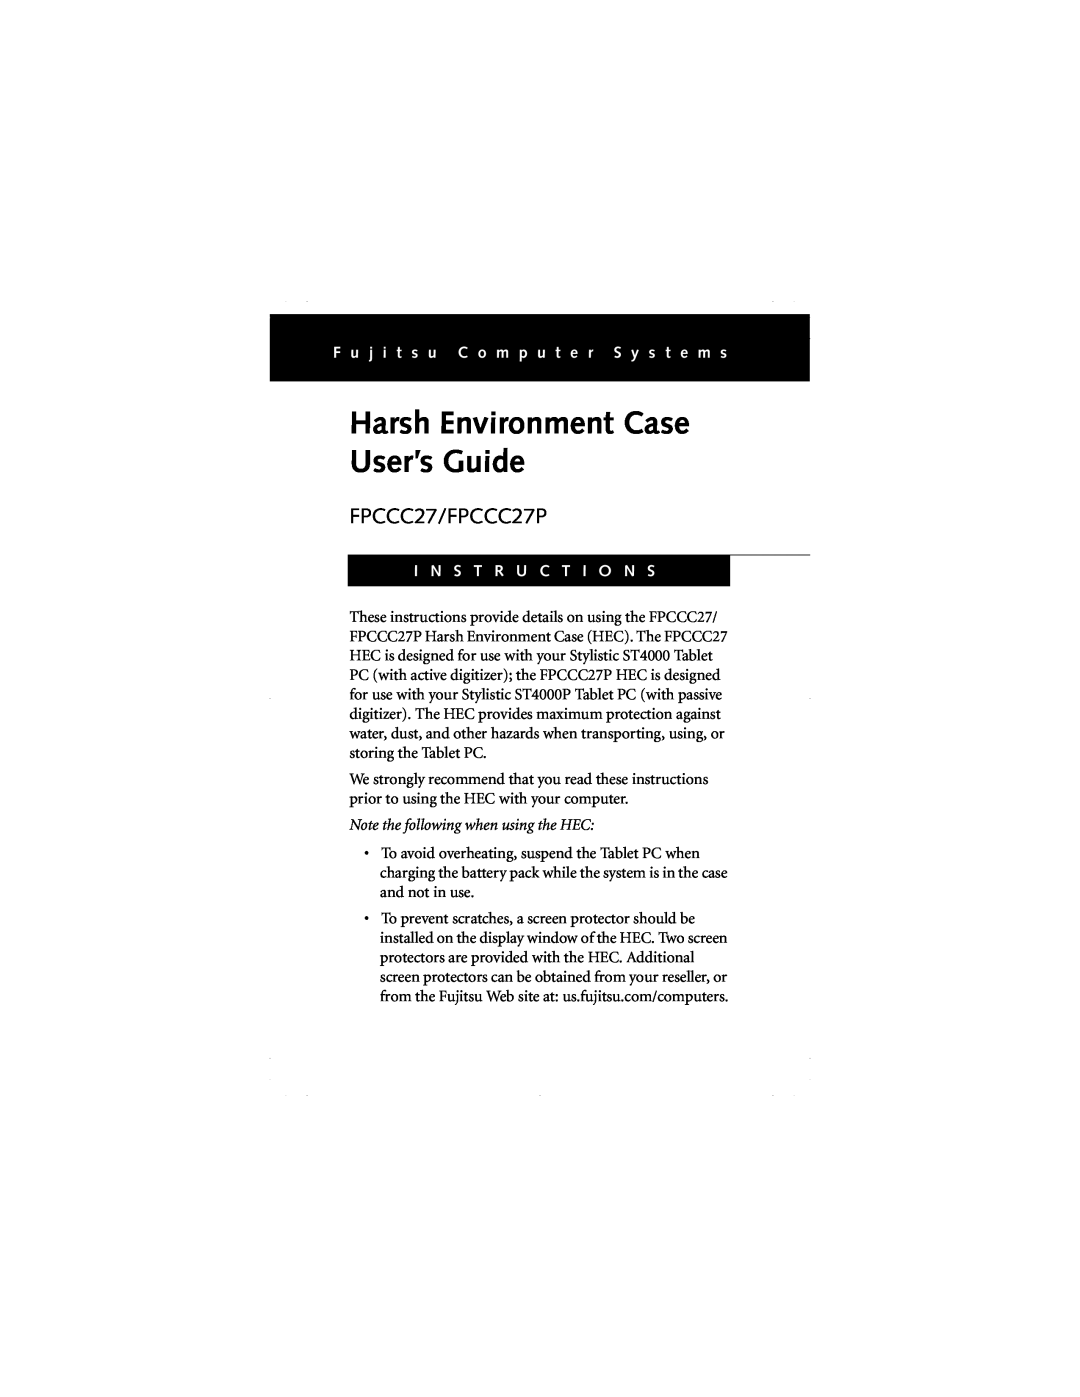 Fujitsu manual Harsh Environment Case User’s Guide, FPCCC27/FPCCC27P, F u j i t s u C o m p u t e r S y s t e m s 